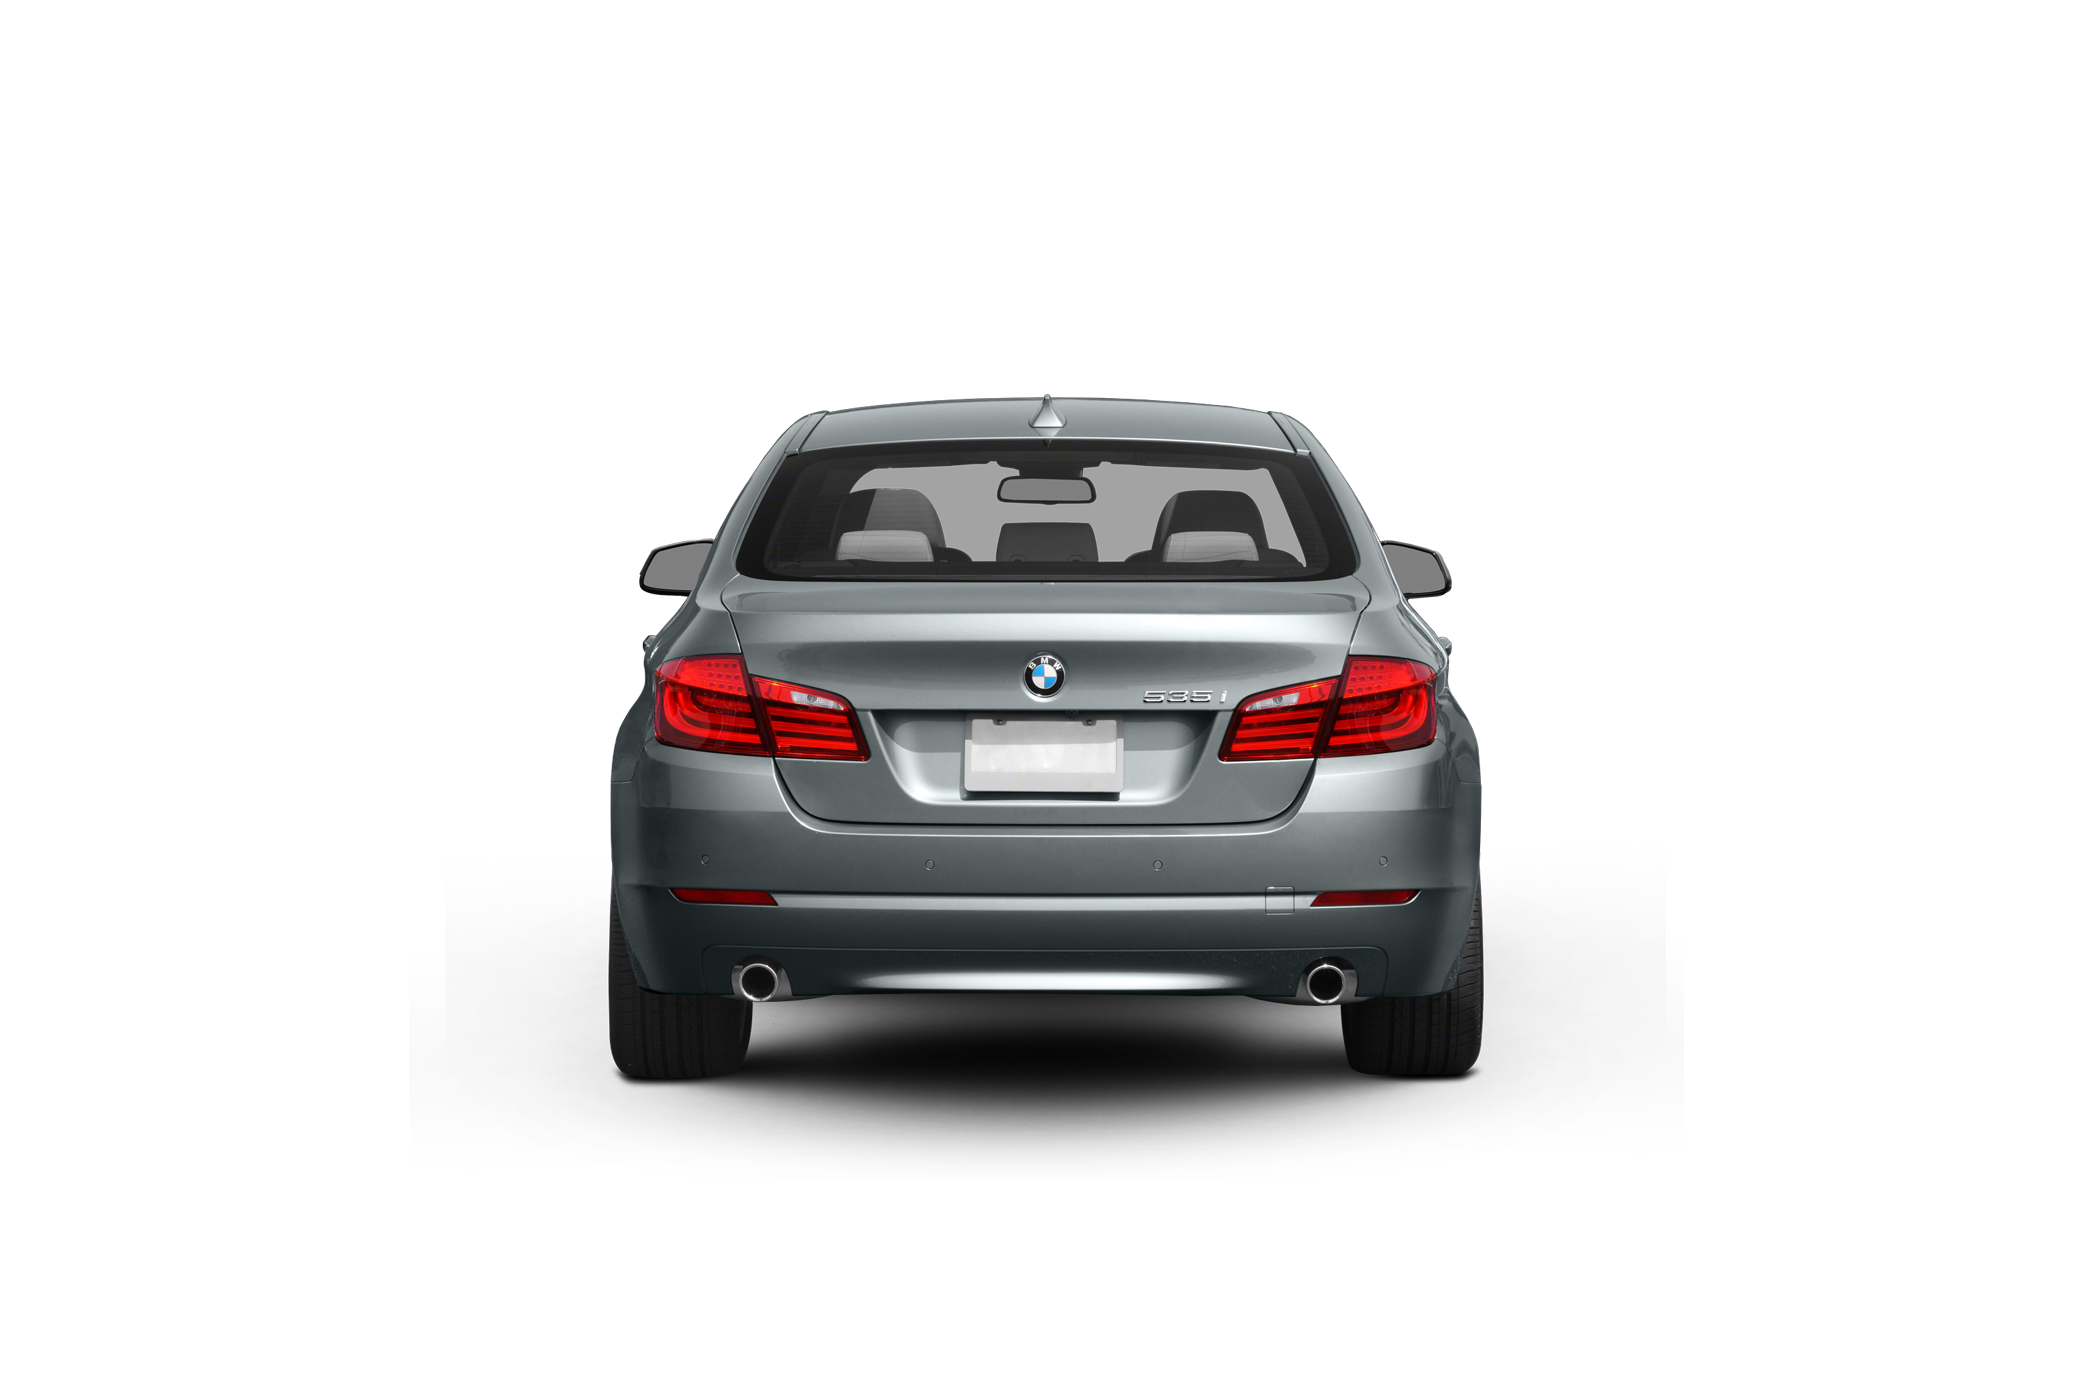 2012 BMW 535